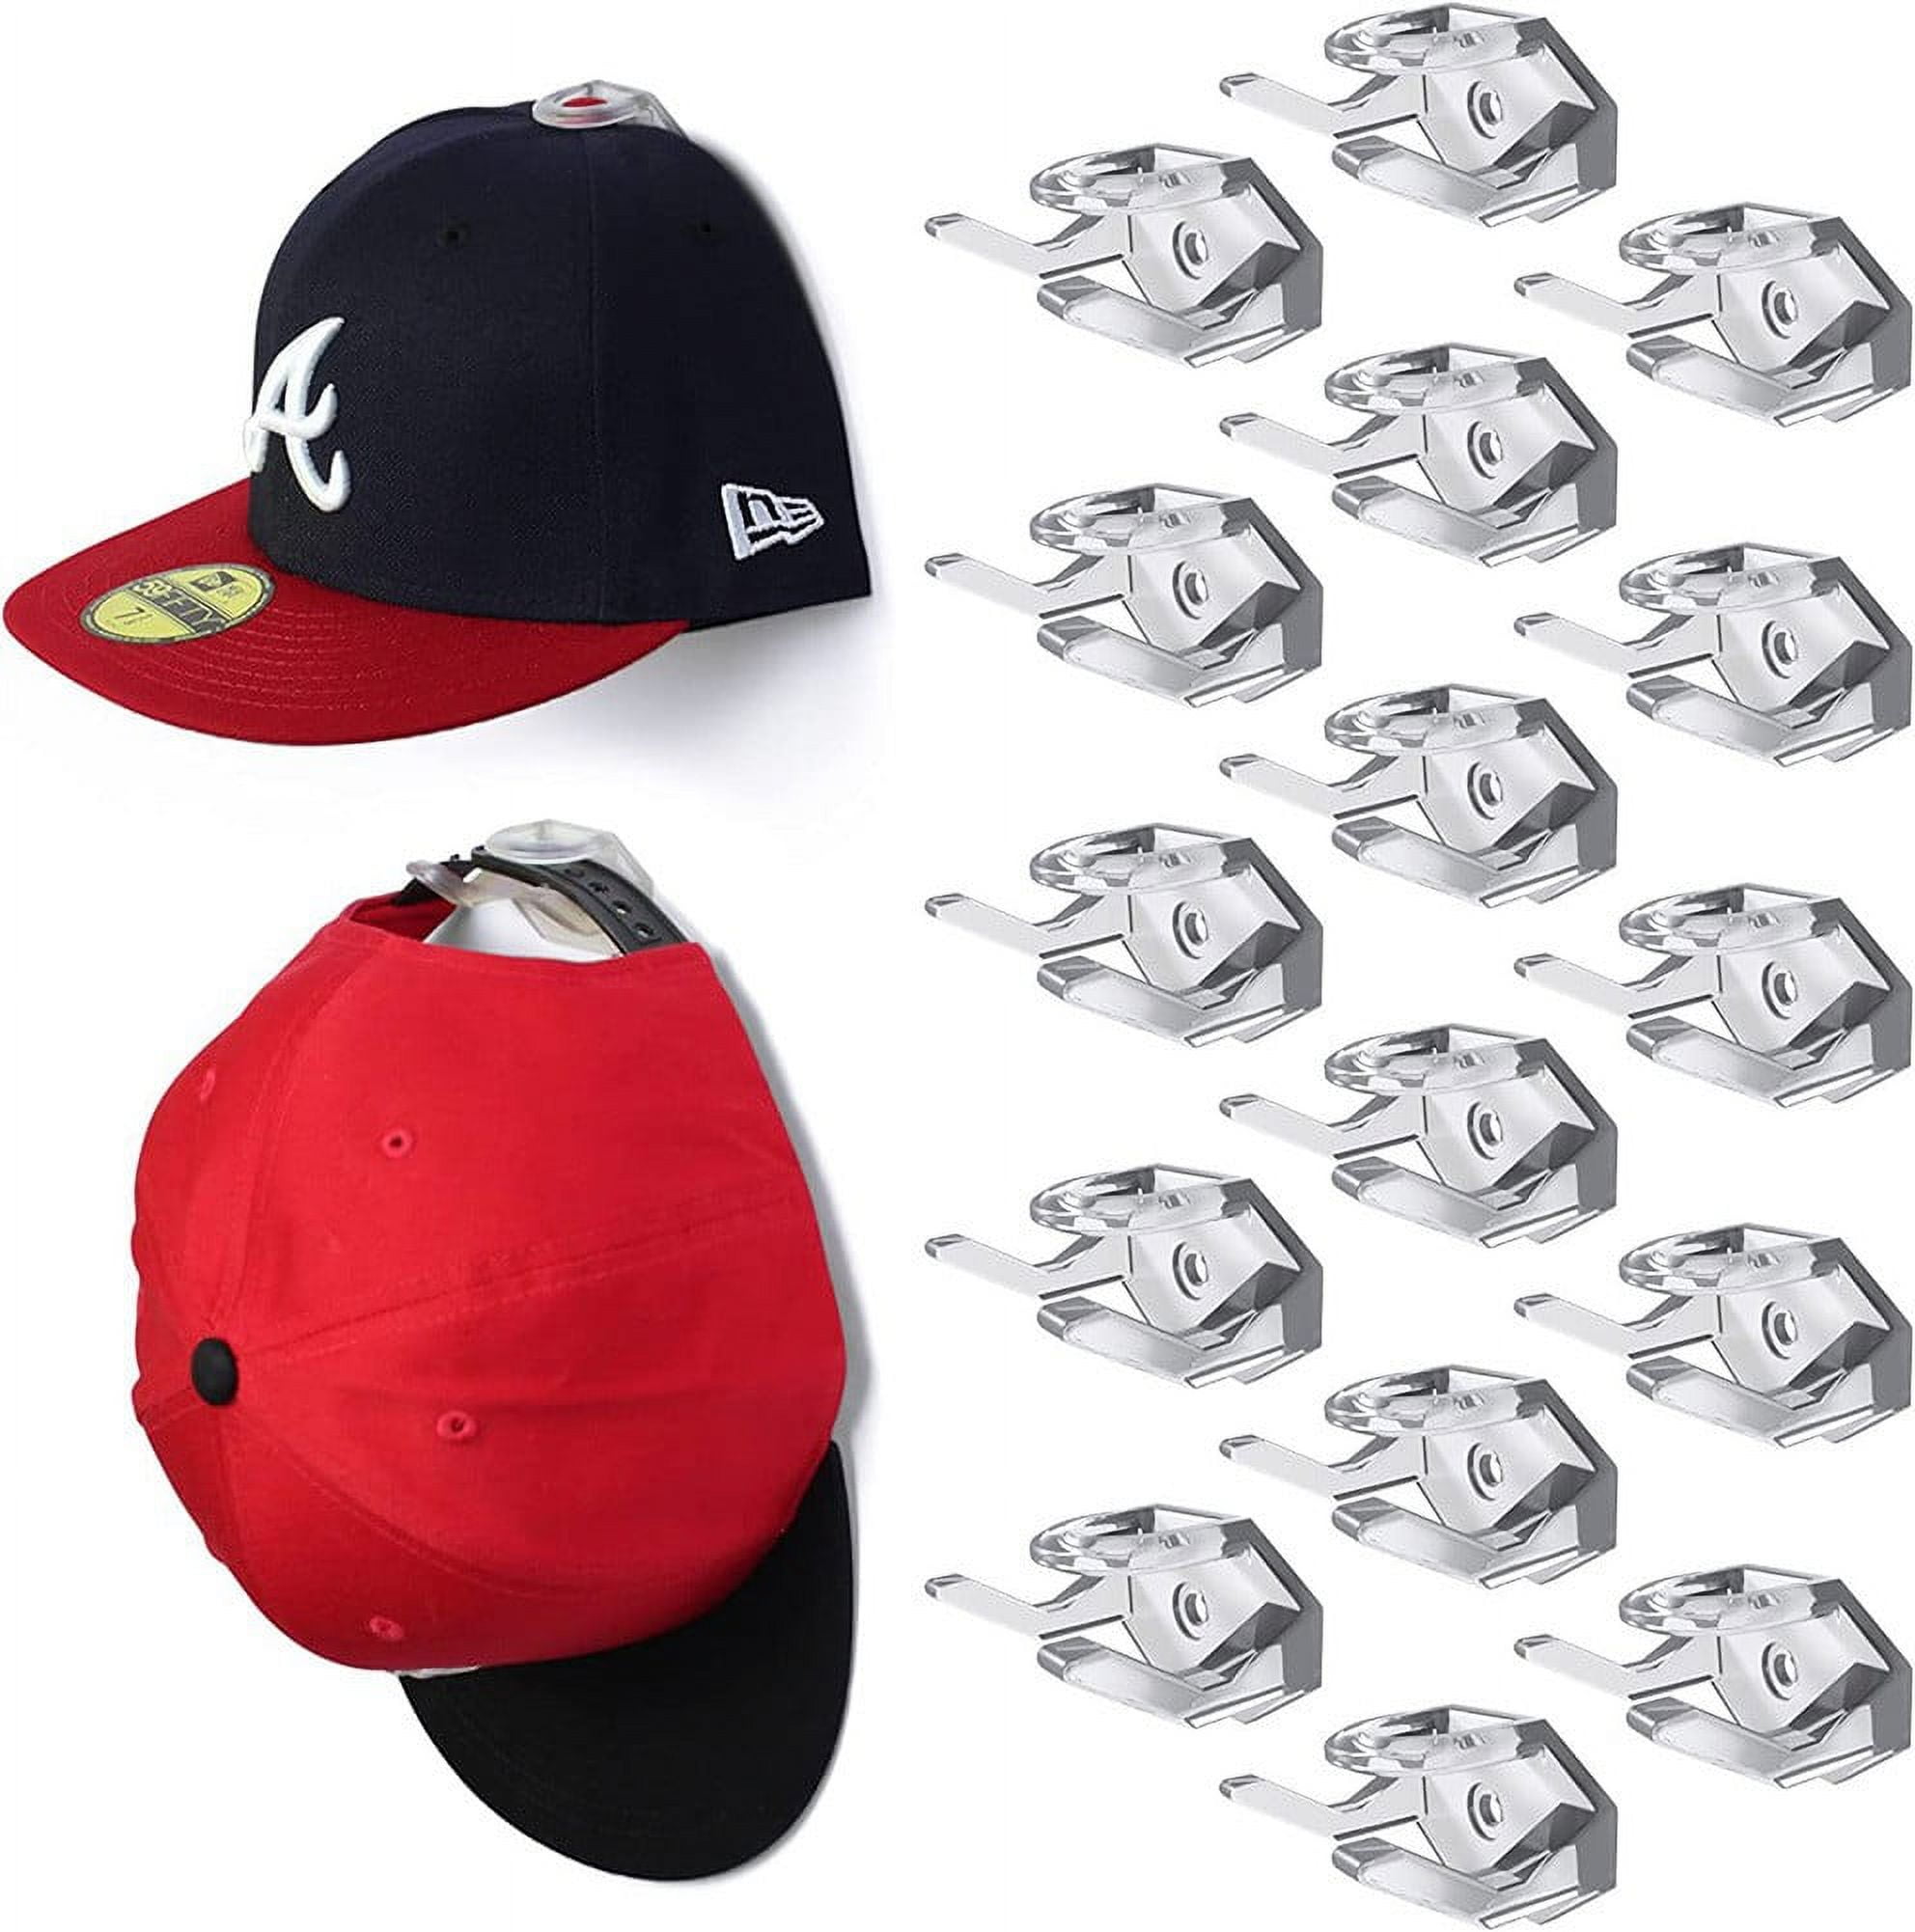 5/8pcs Adhesive Hat Rack Display Hooks for Wall Door Baseball Cap